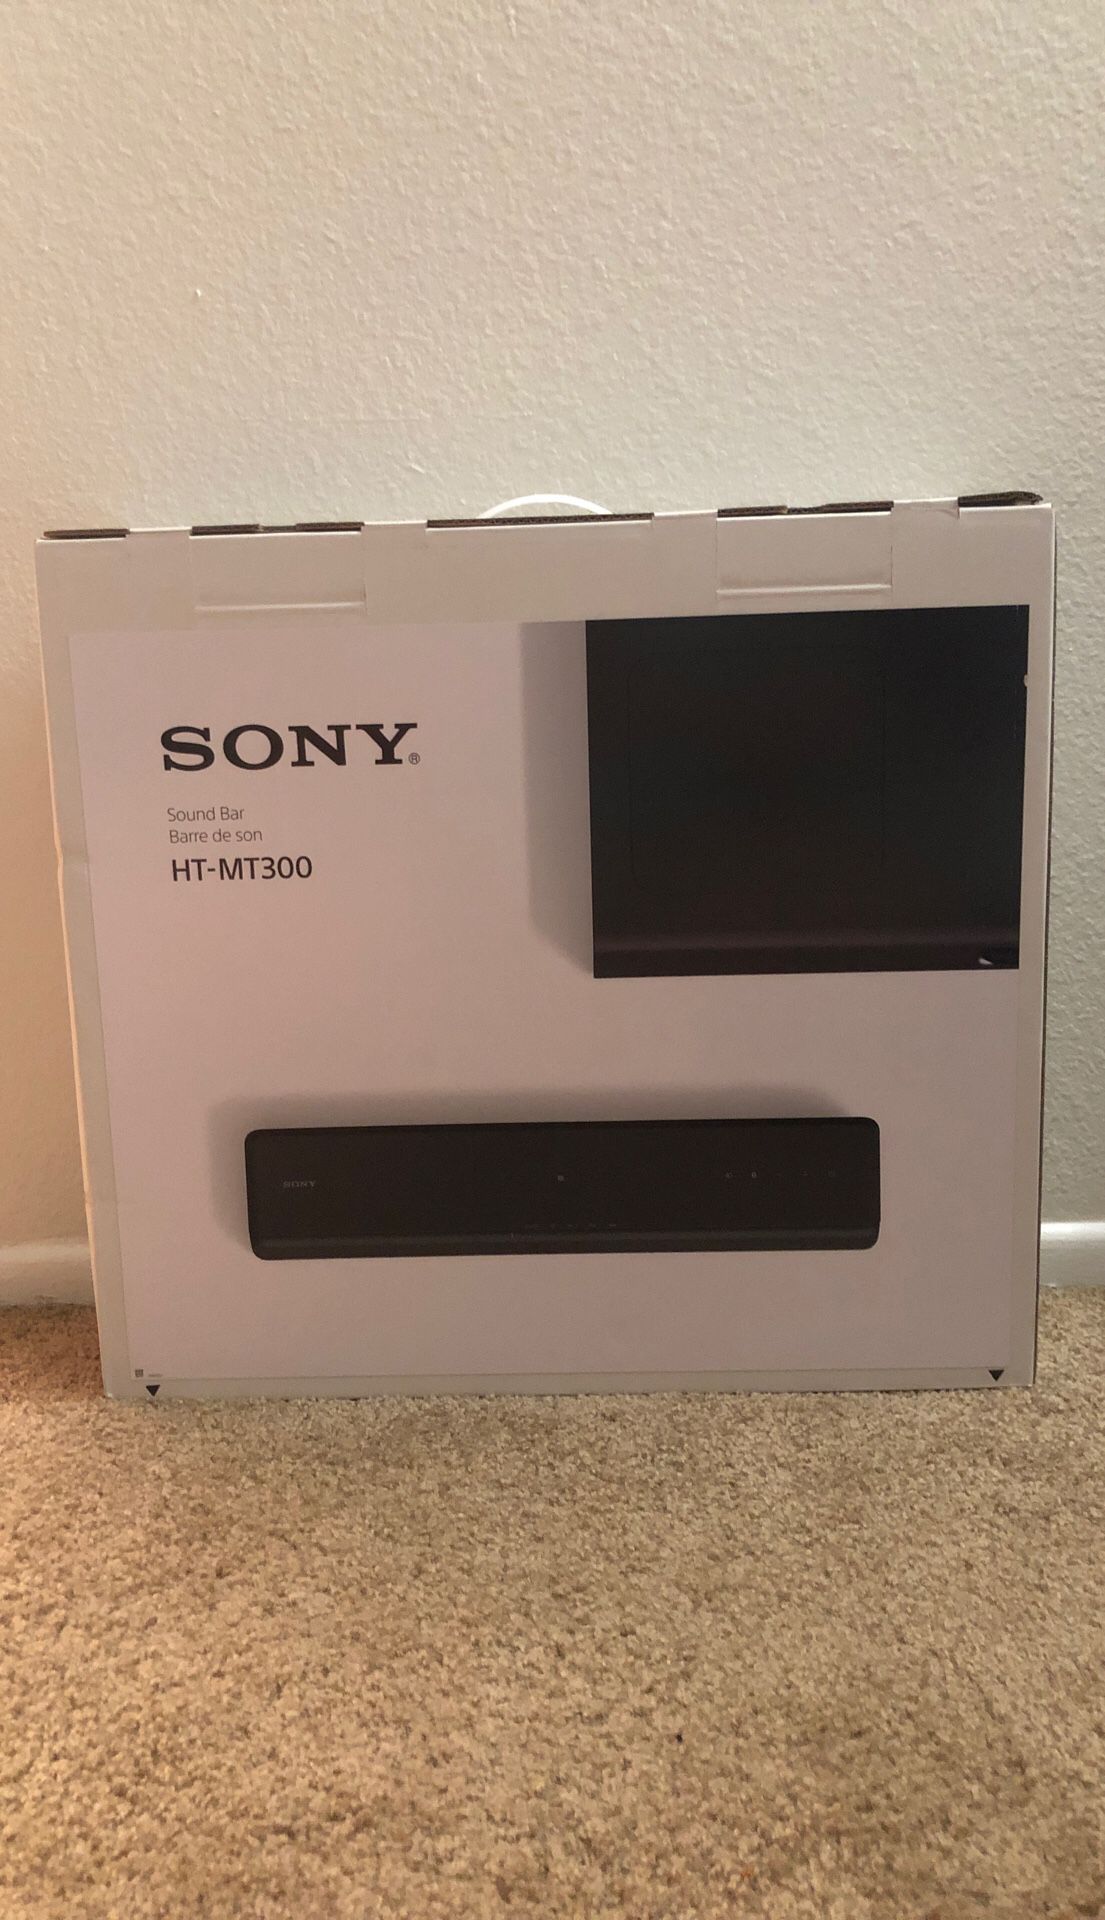 Sony Sound Bar HT-MT300 (New/Unopened)